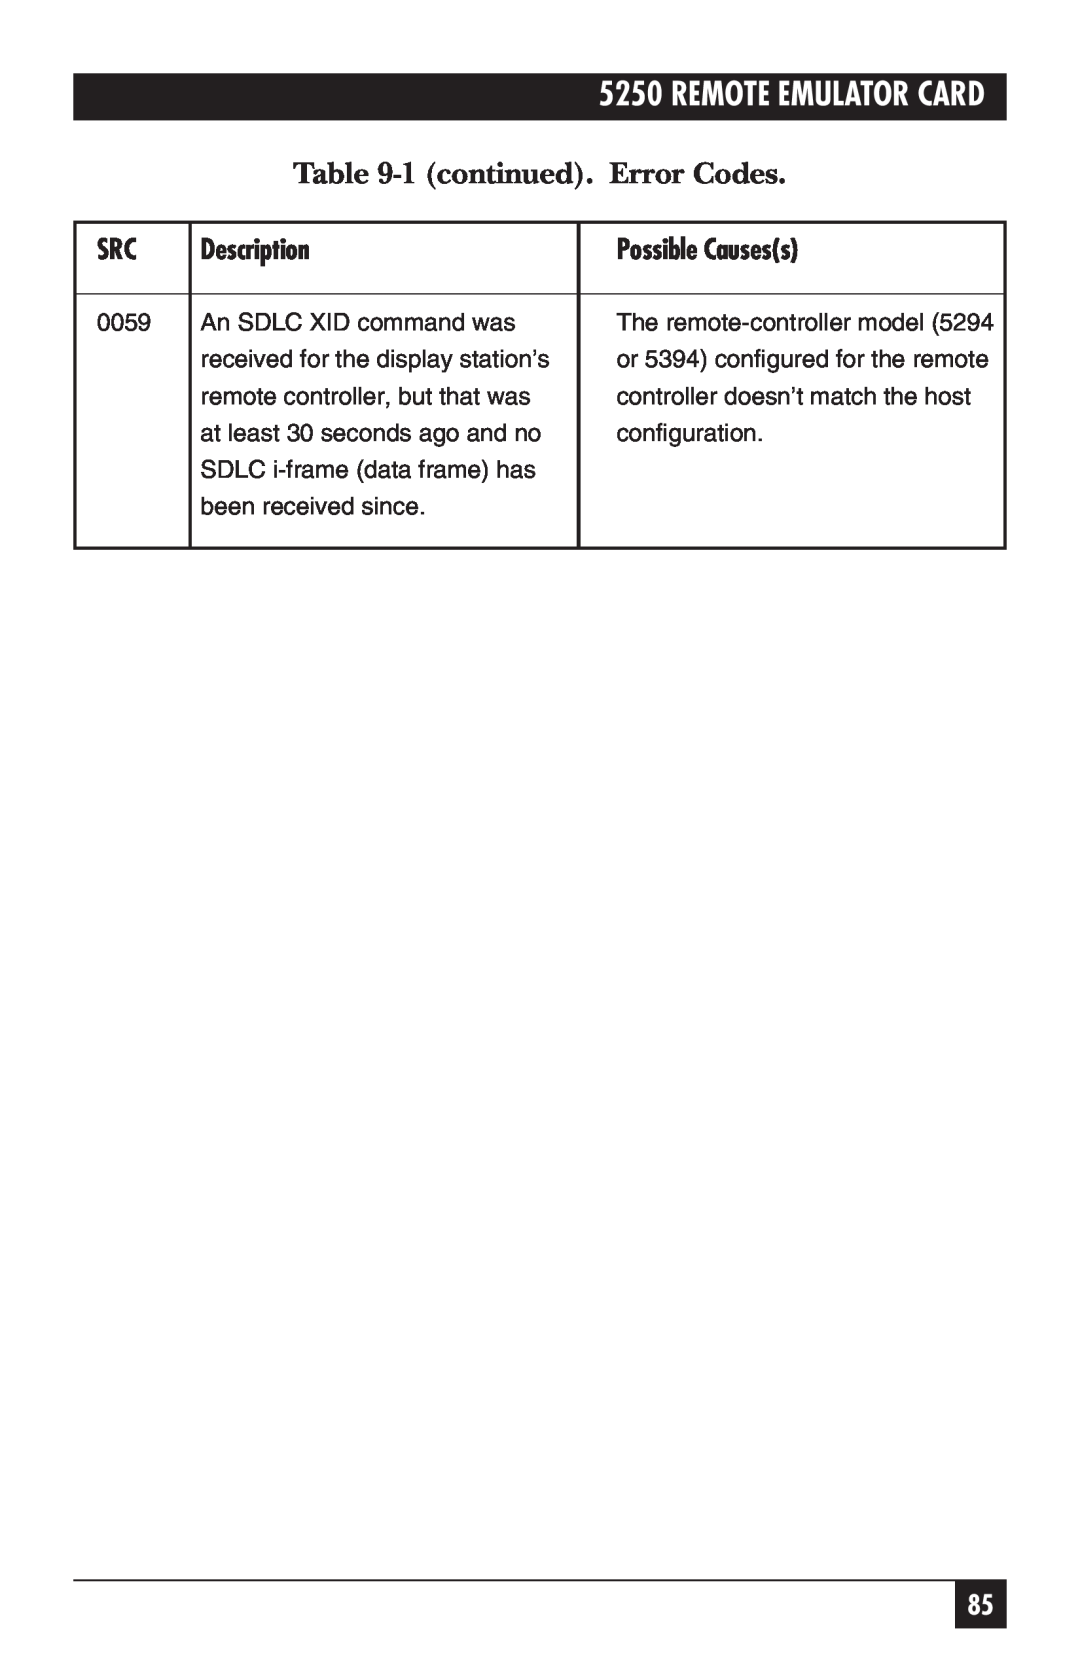 Black Box Remote Emulator Card, 5250 manual Description, Possible Causess, 0059 